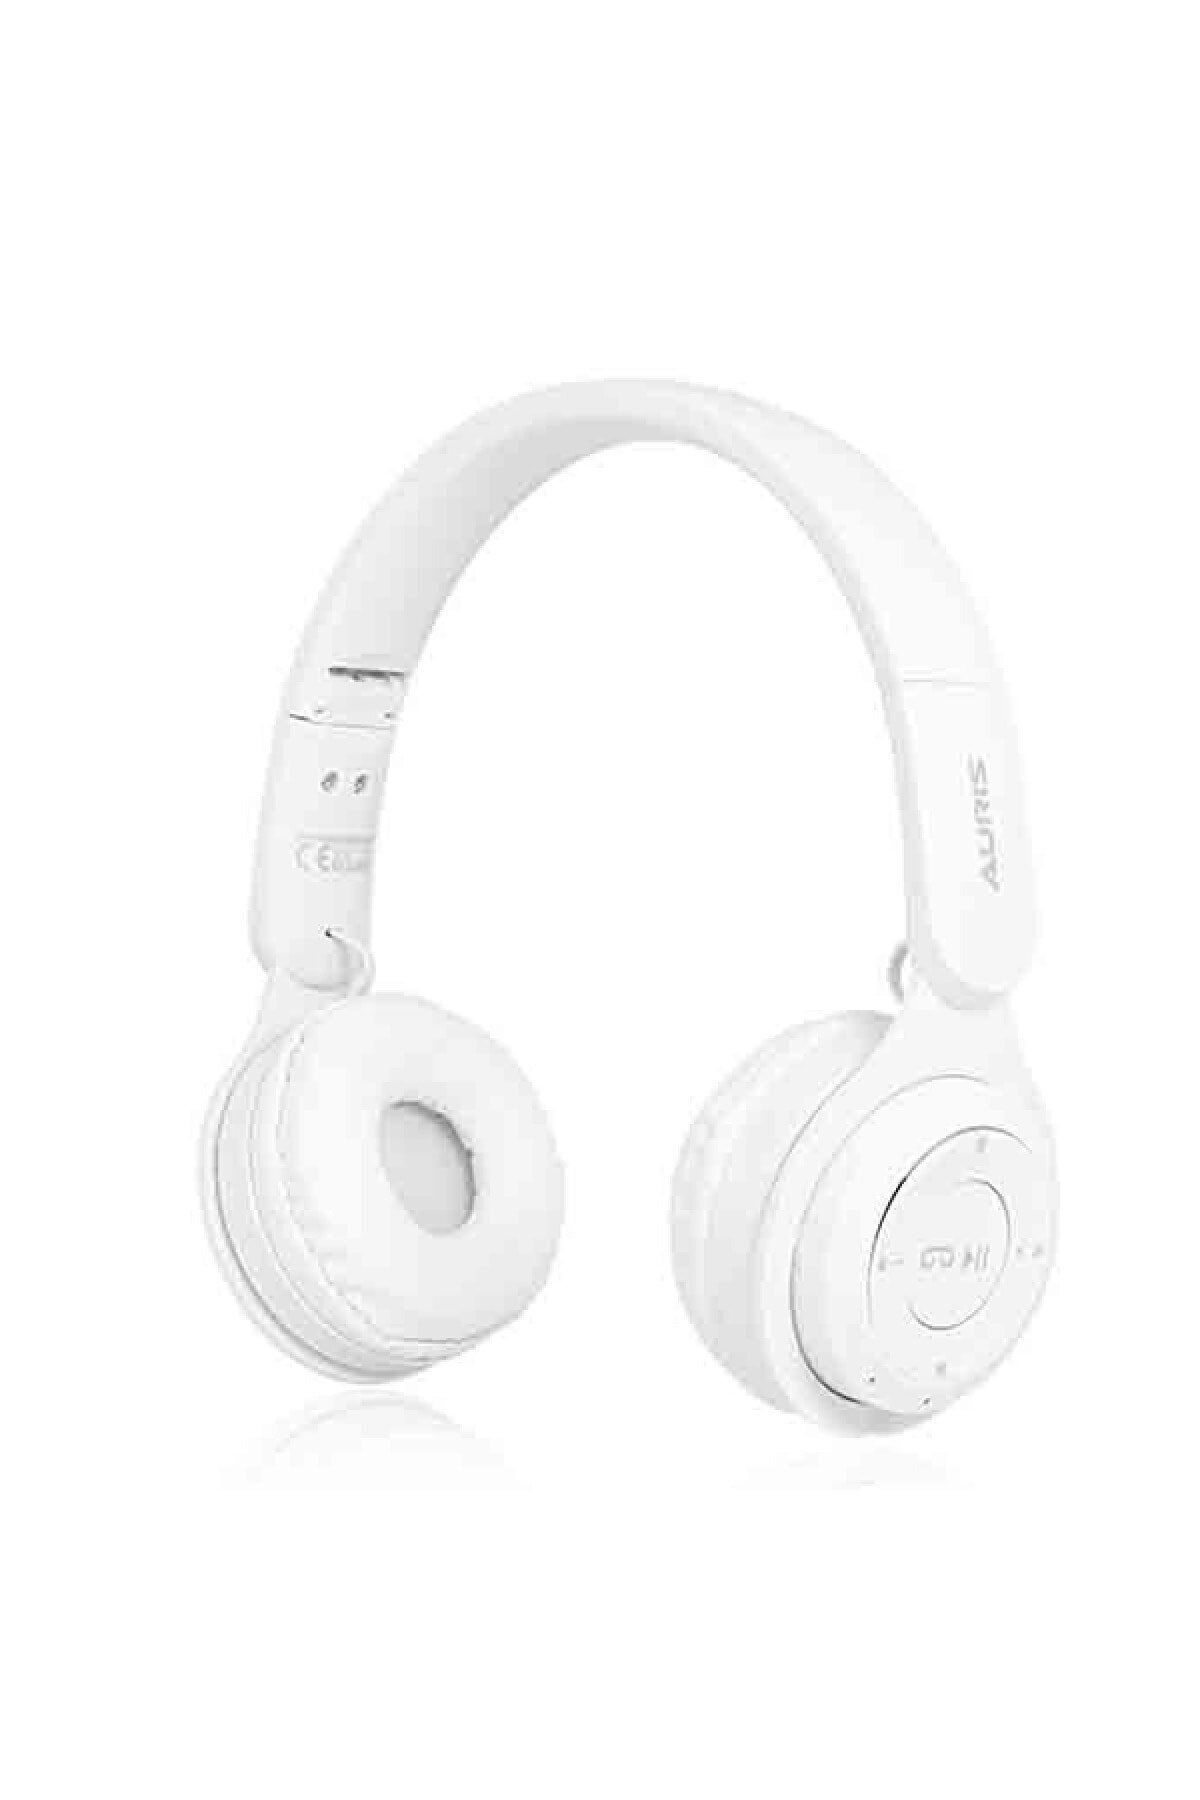 Auris Bluetooth Kulak Üstü Kulaklık Ars-bt13